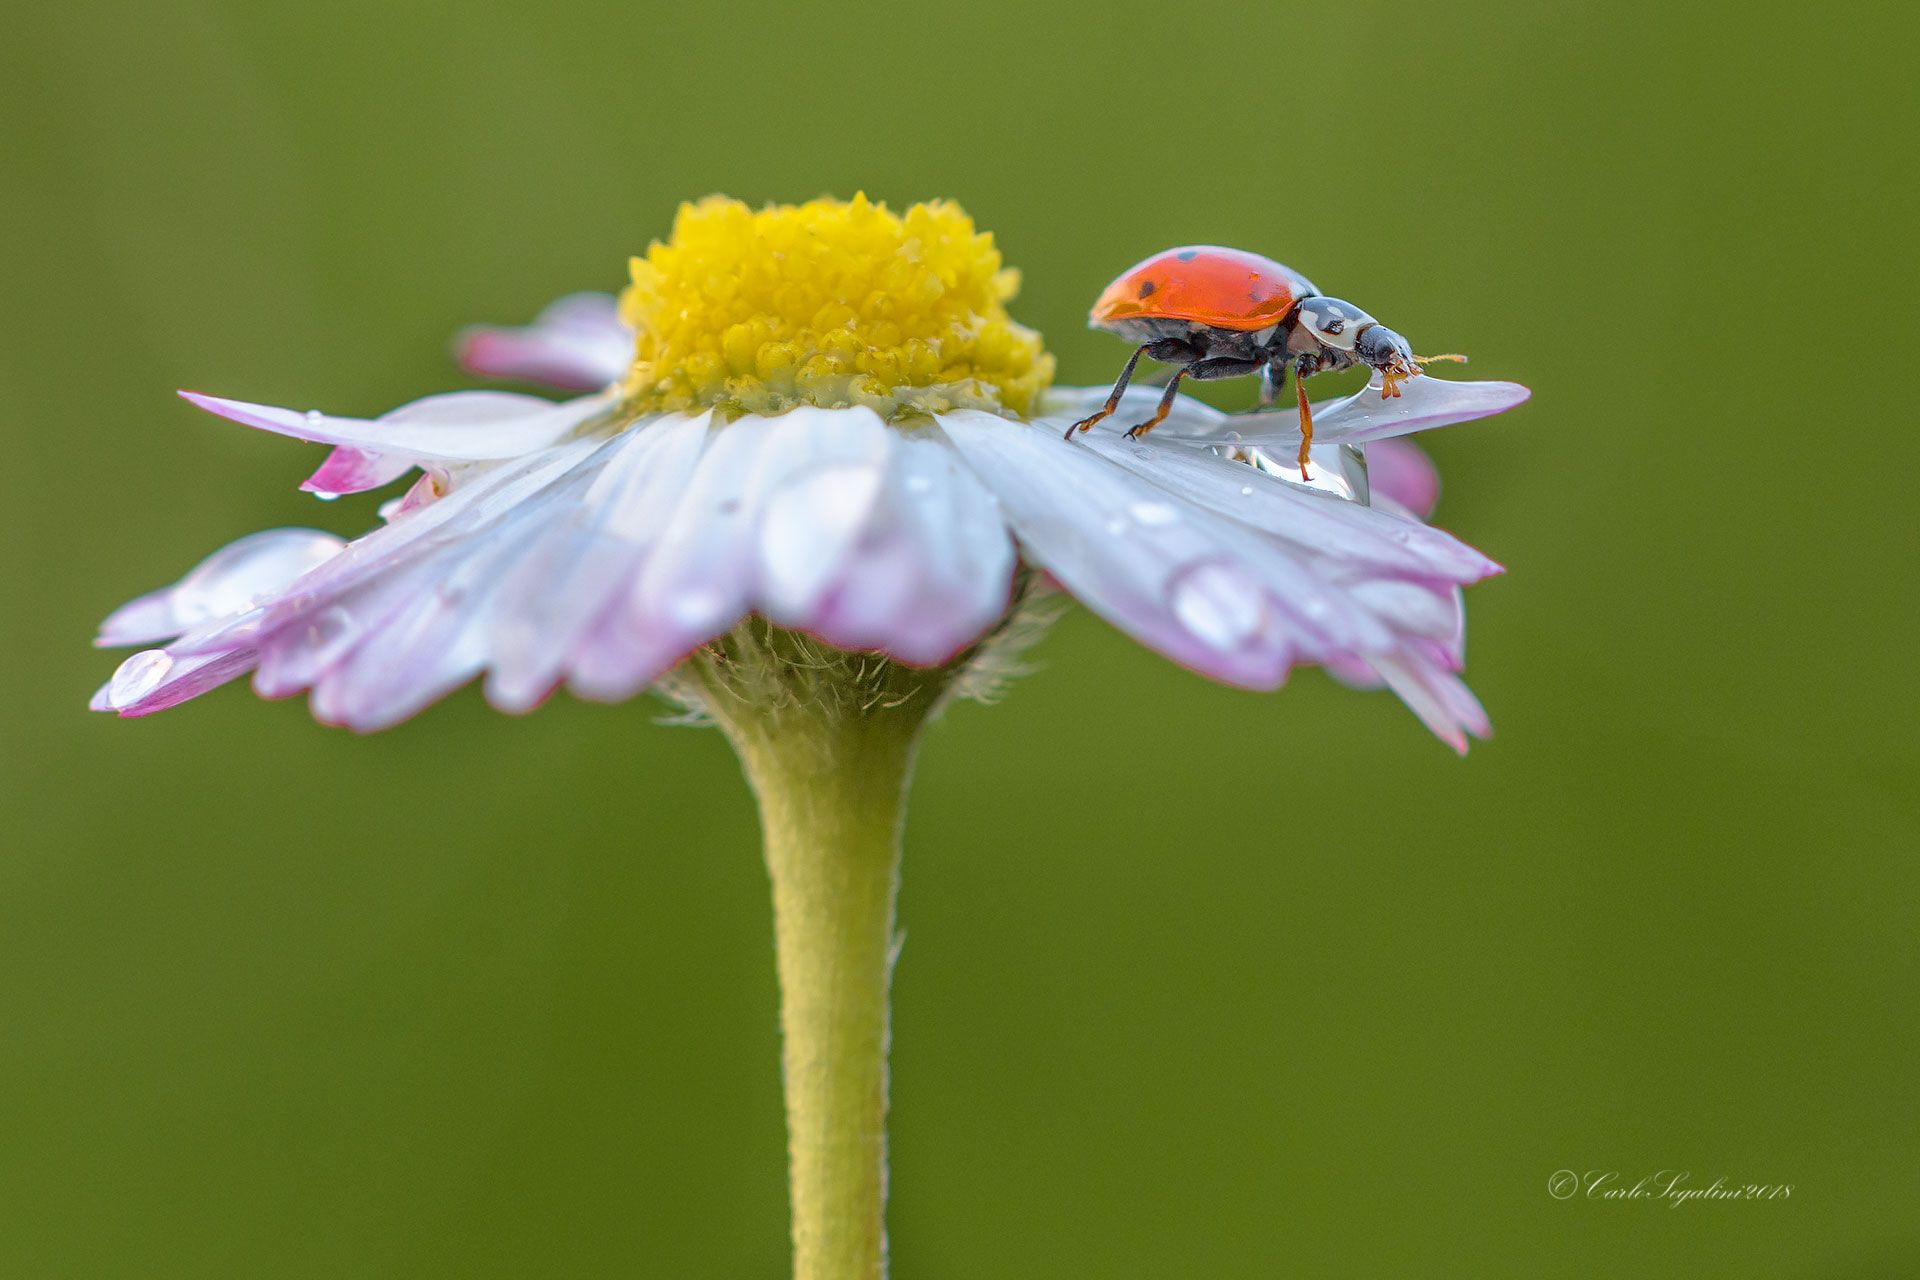 Ladybug at the watering hole...